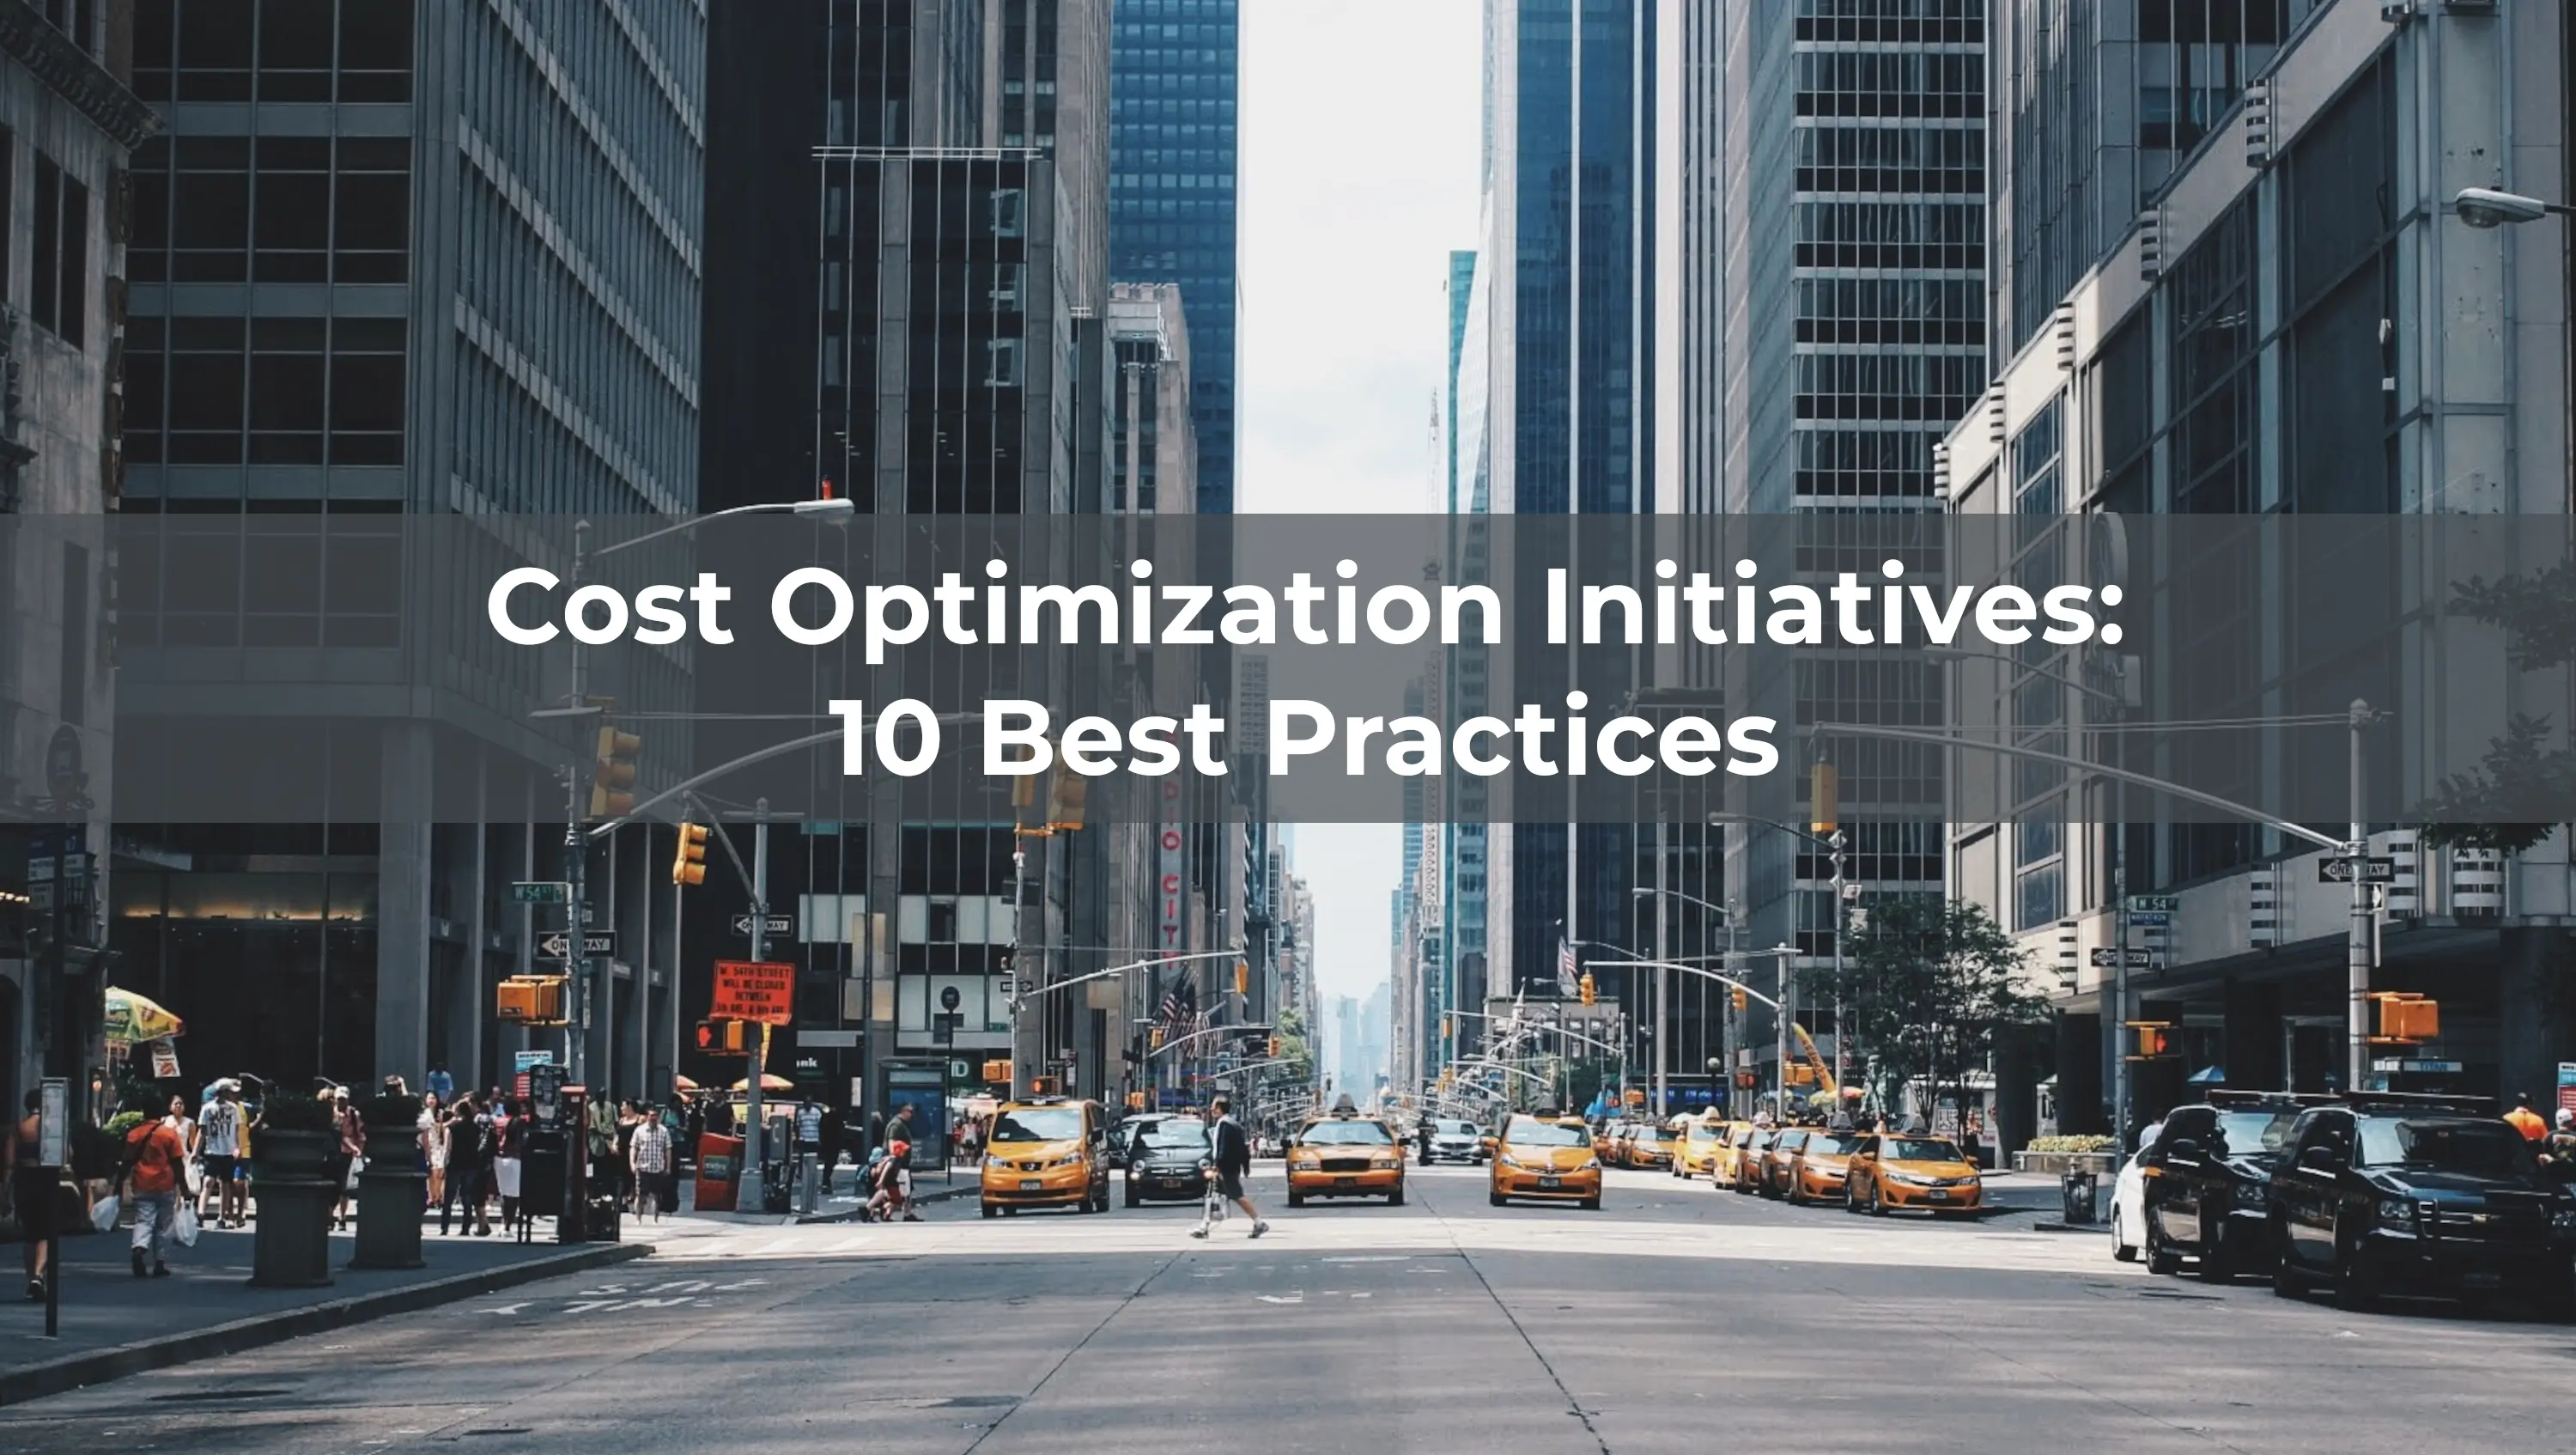 Cost Optimization Initiatives: 10 Best Practices